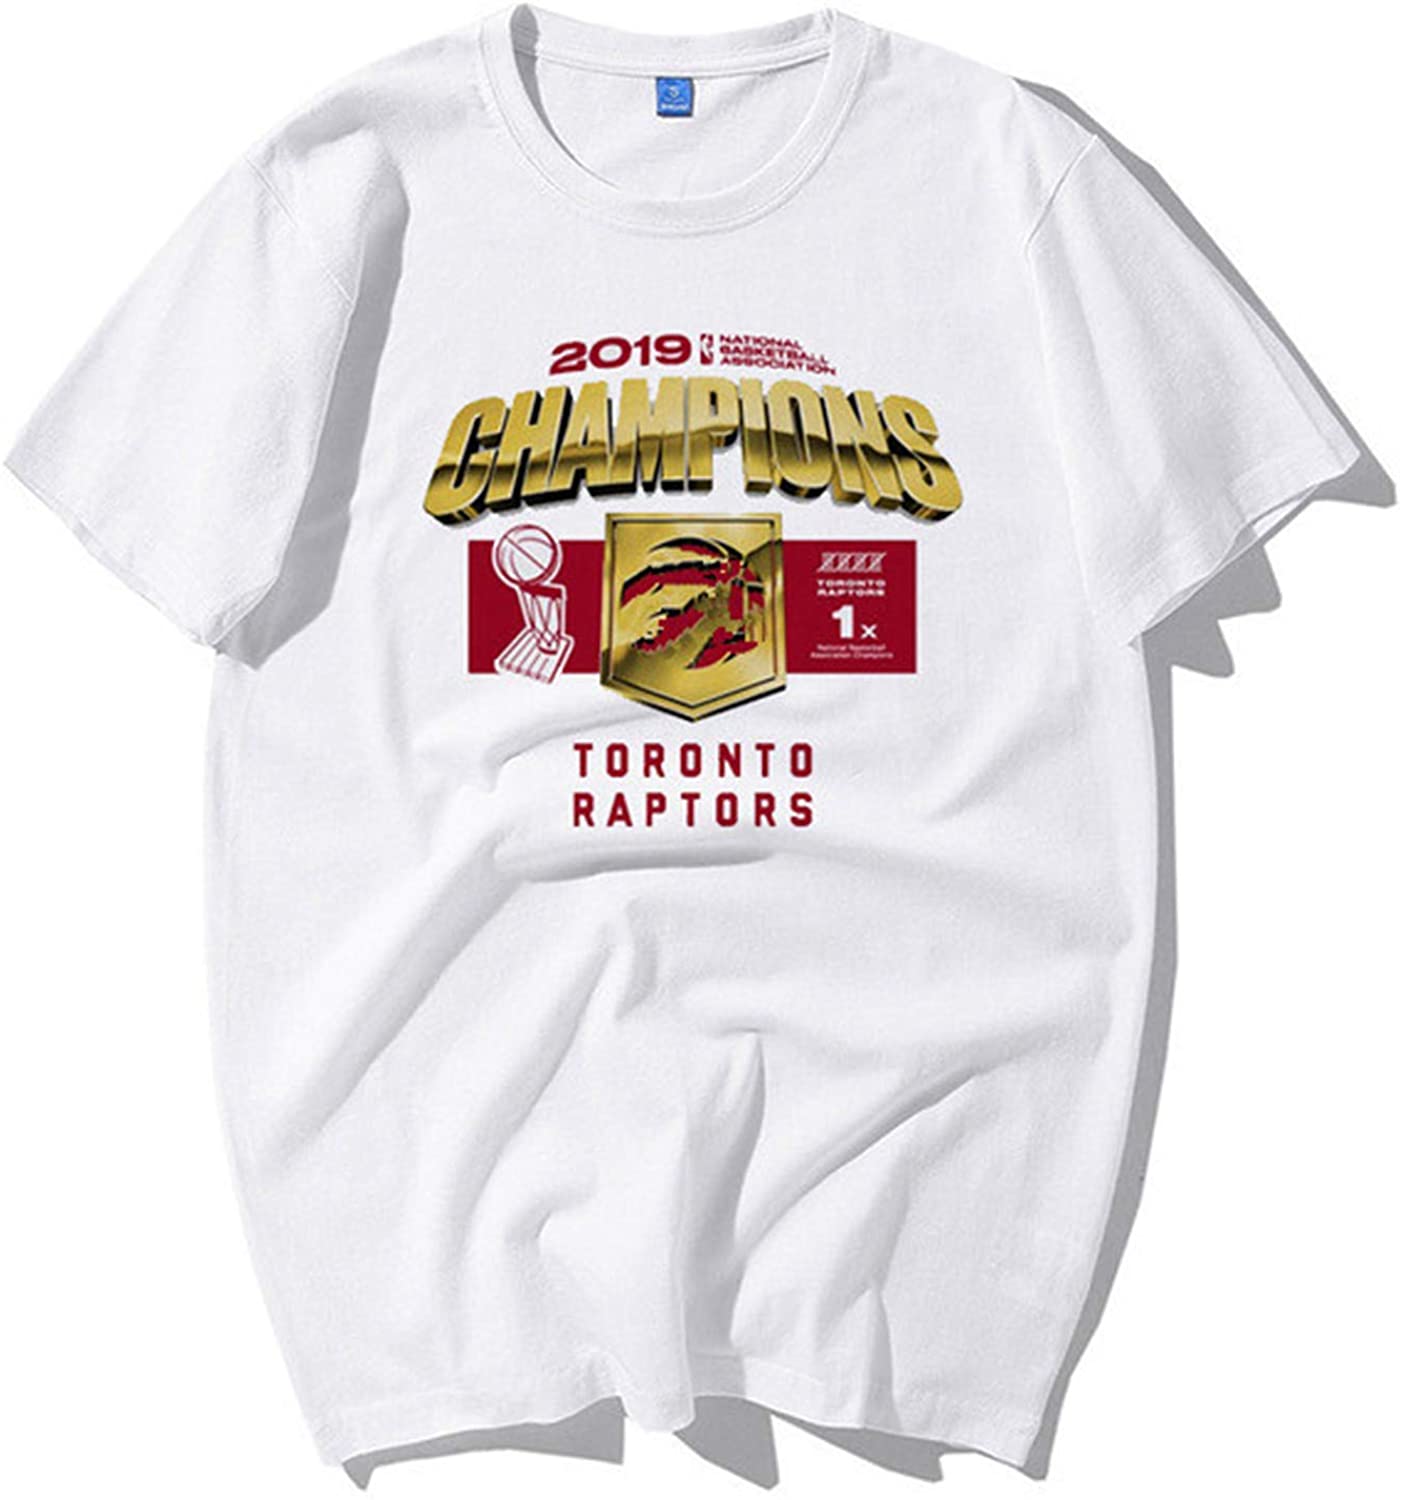 Raptors 2019 Champions T-Shirt